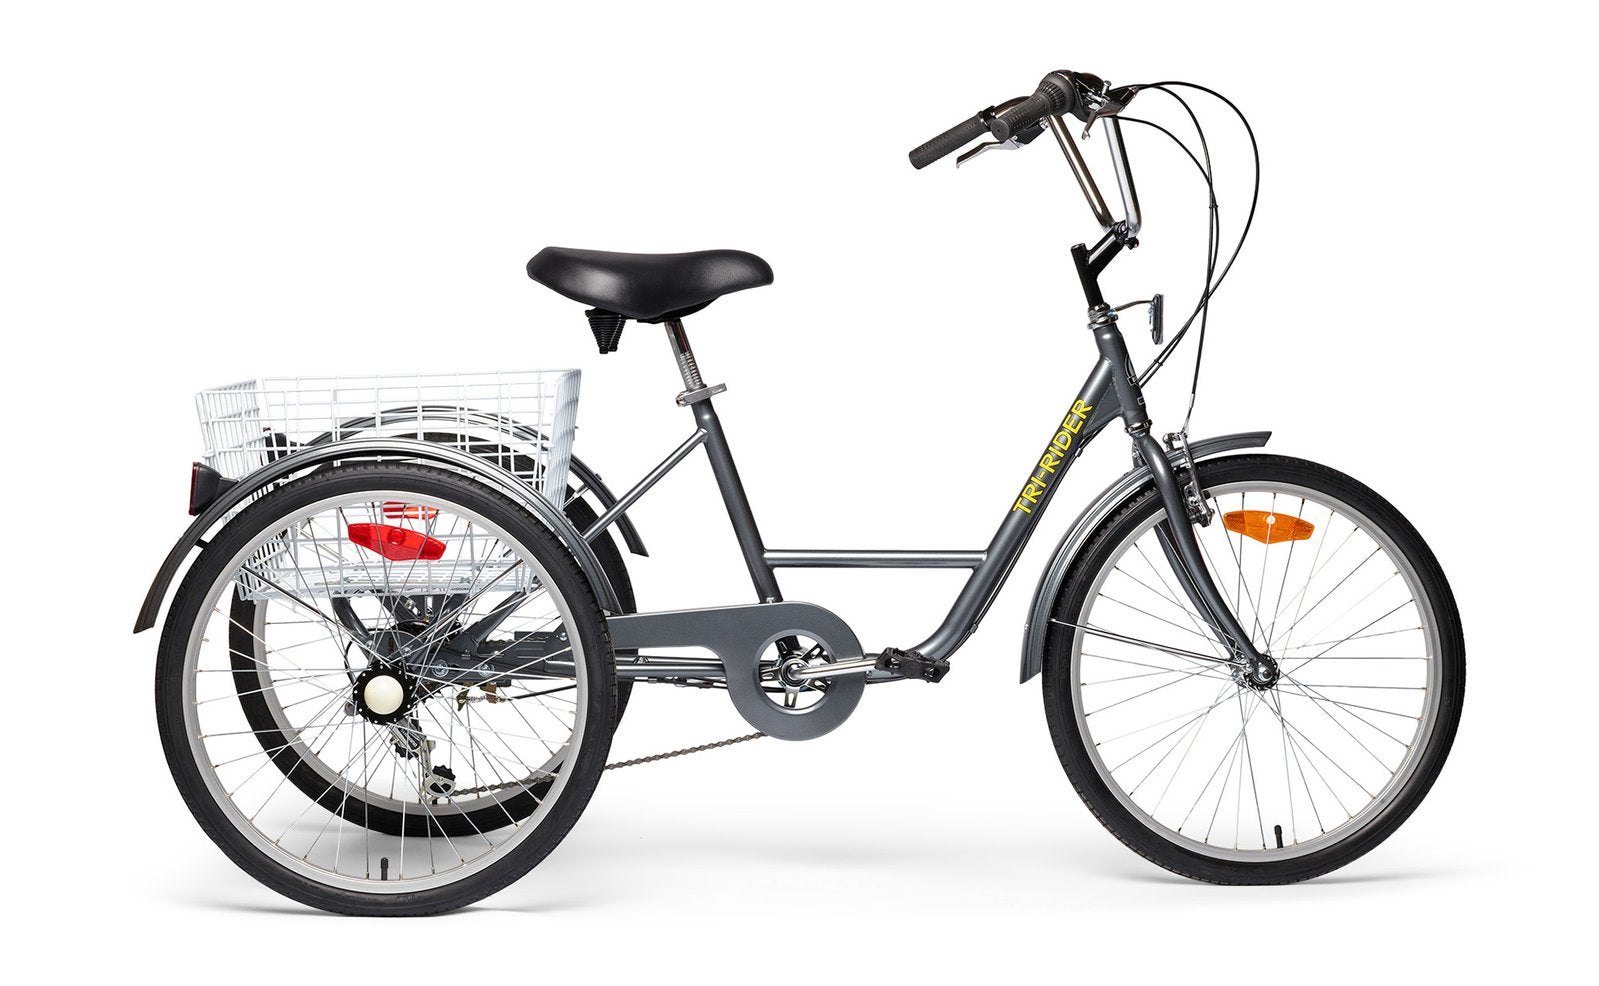 Belize Bike TRI-RIDER ROAM 96243 24" Adult Tricycle